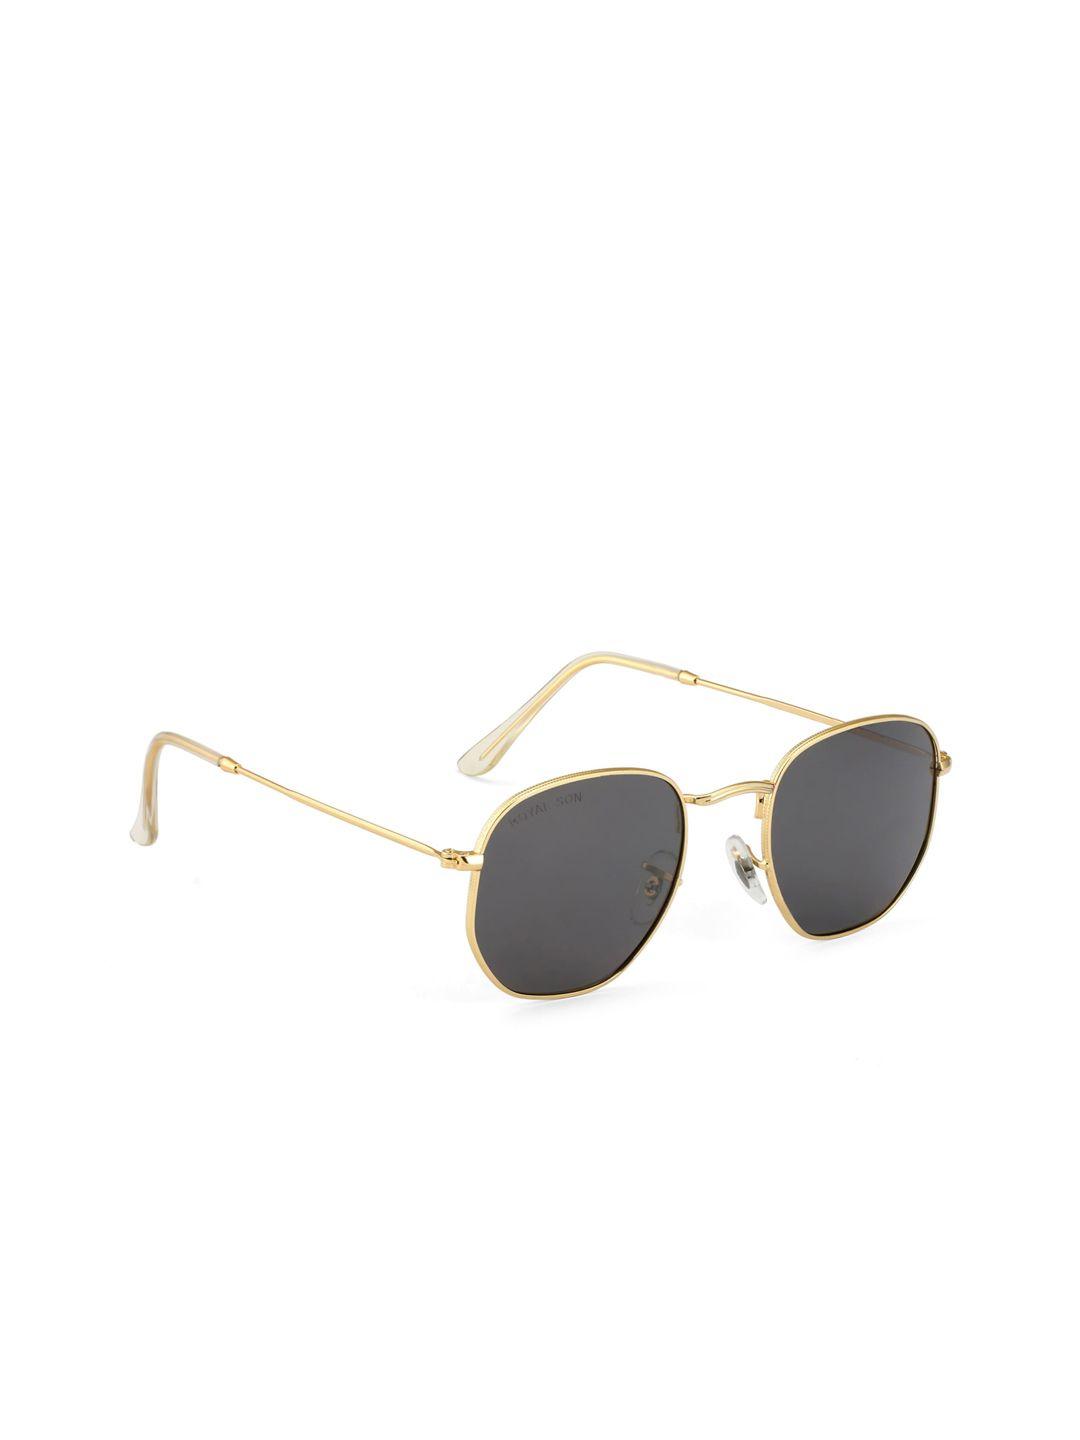 royal son unisex black lens & gold-toned oval sunglasses